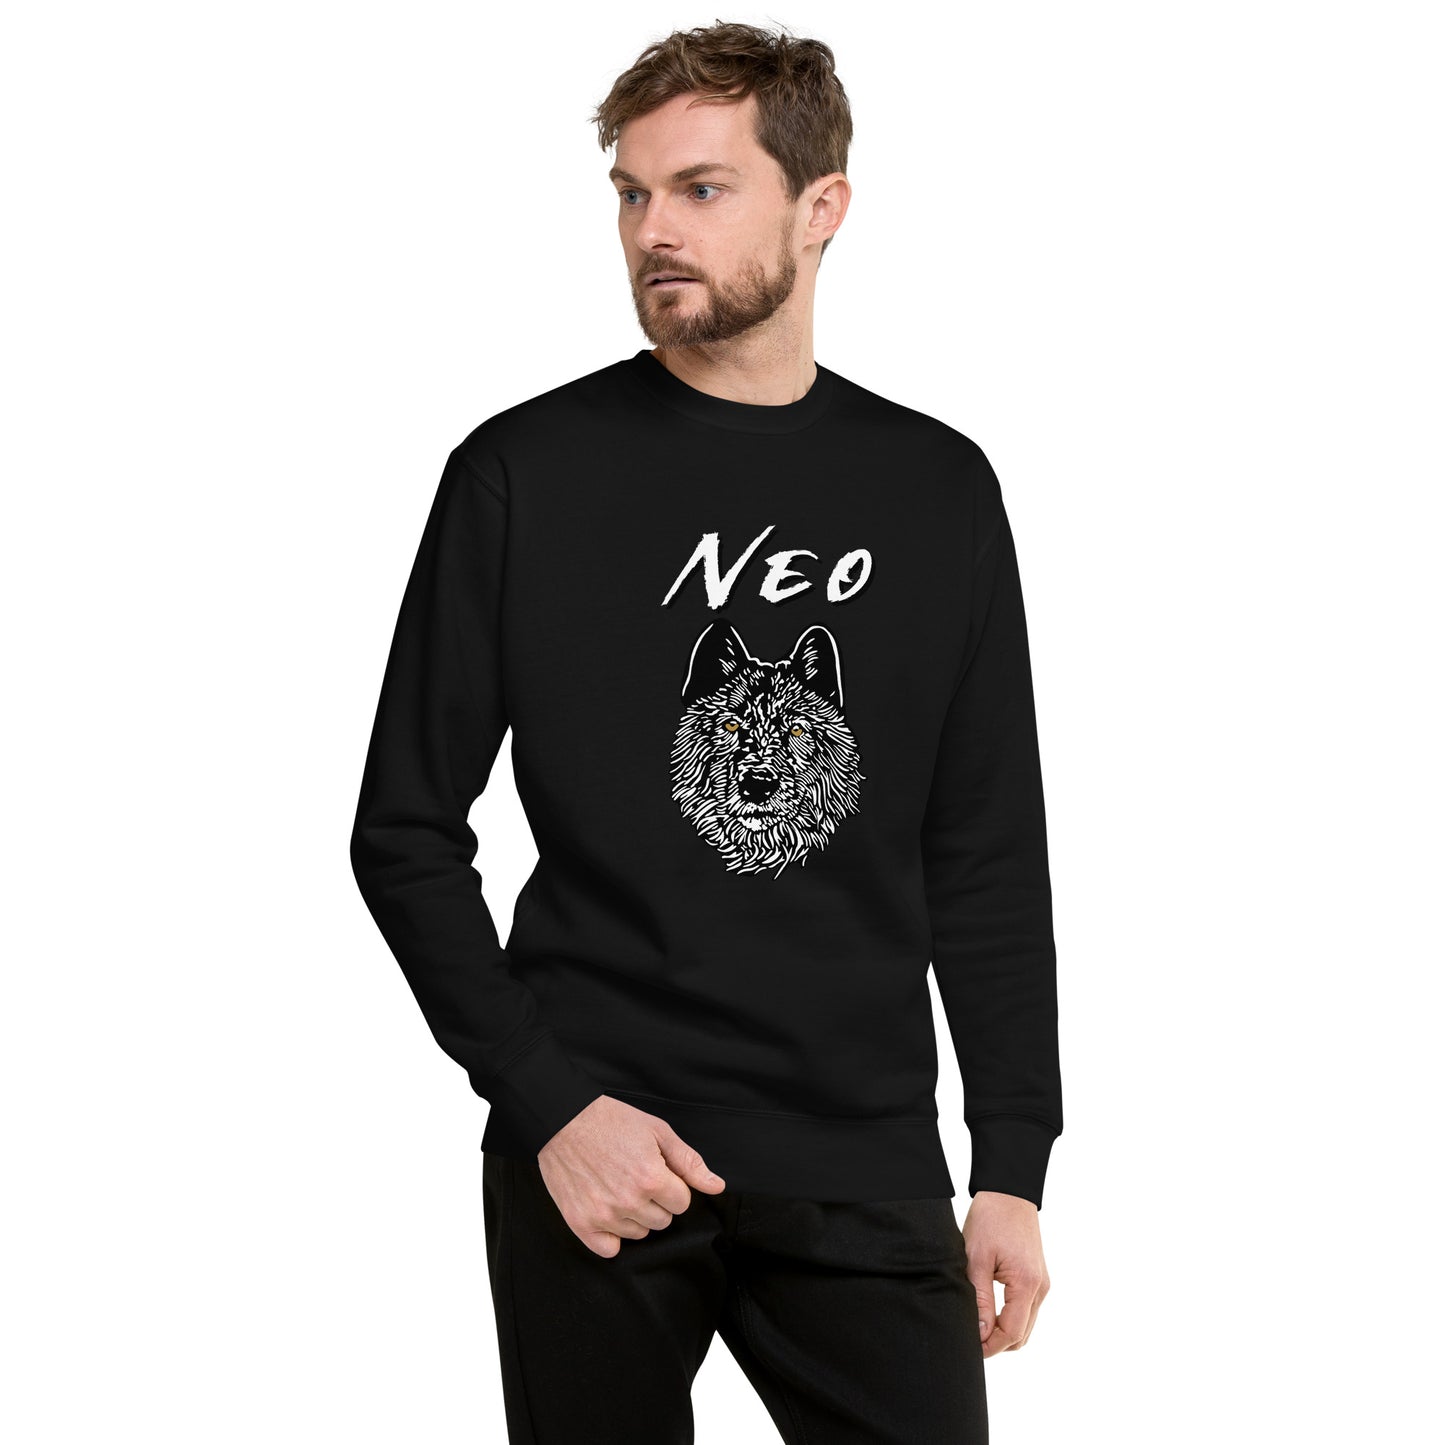 Neo Unisex Premium Sweatshirt